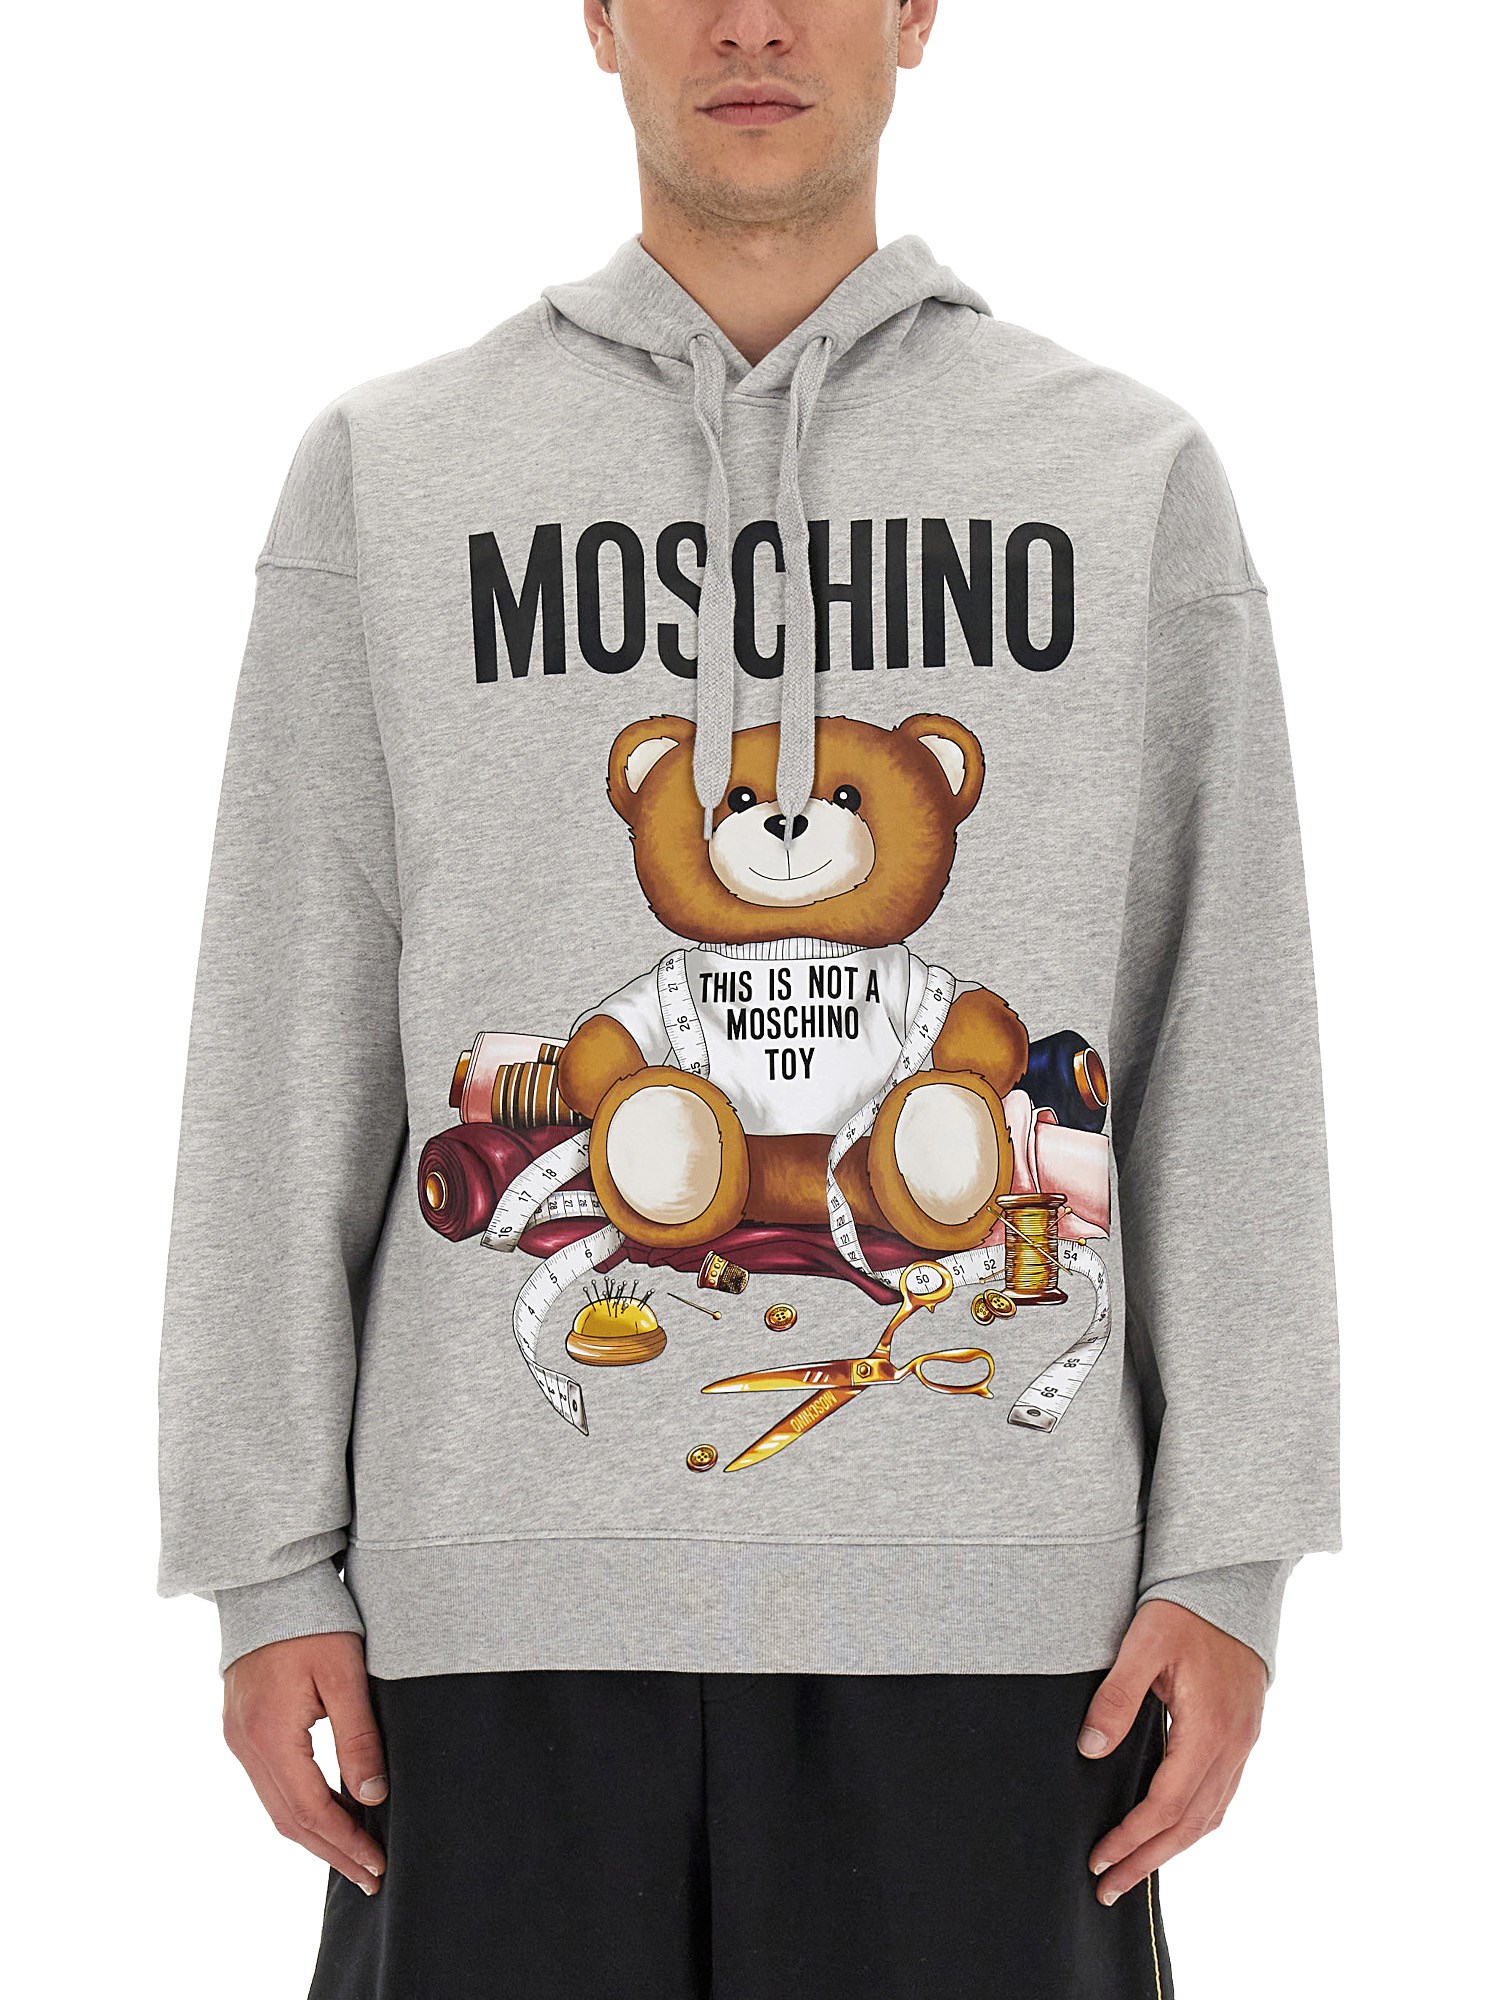 moschino teddy print sweatshirt